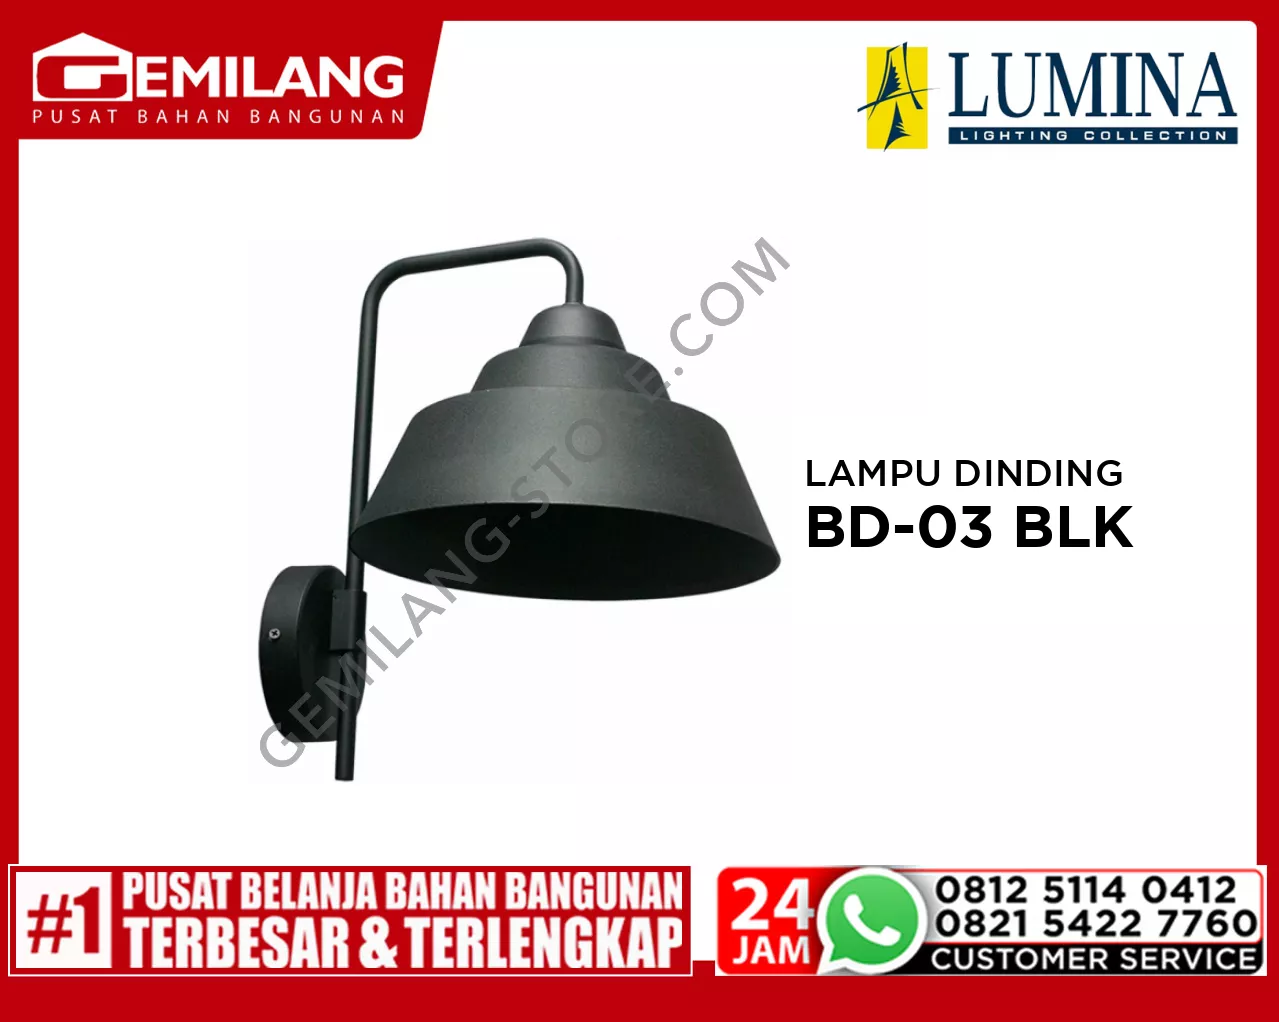 LAMPU DINDING BD-03 BLK